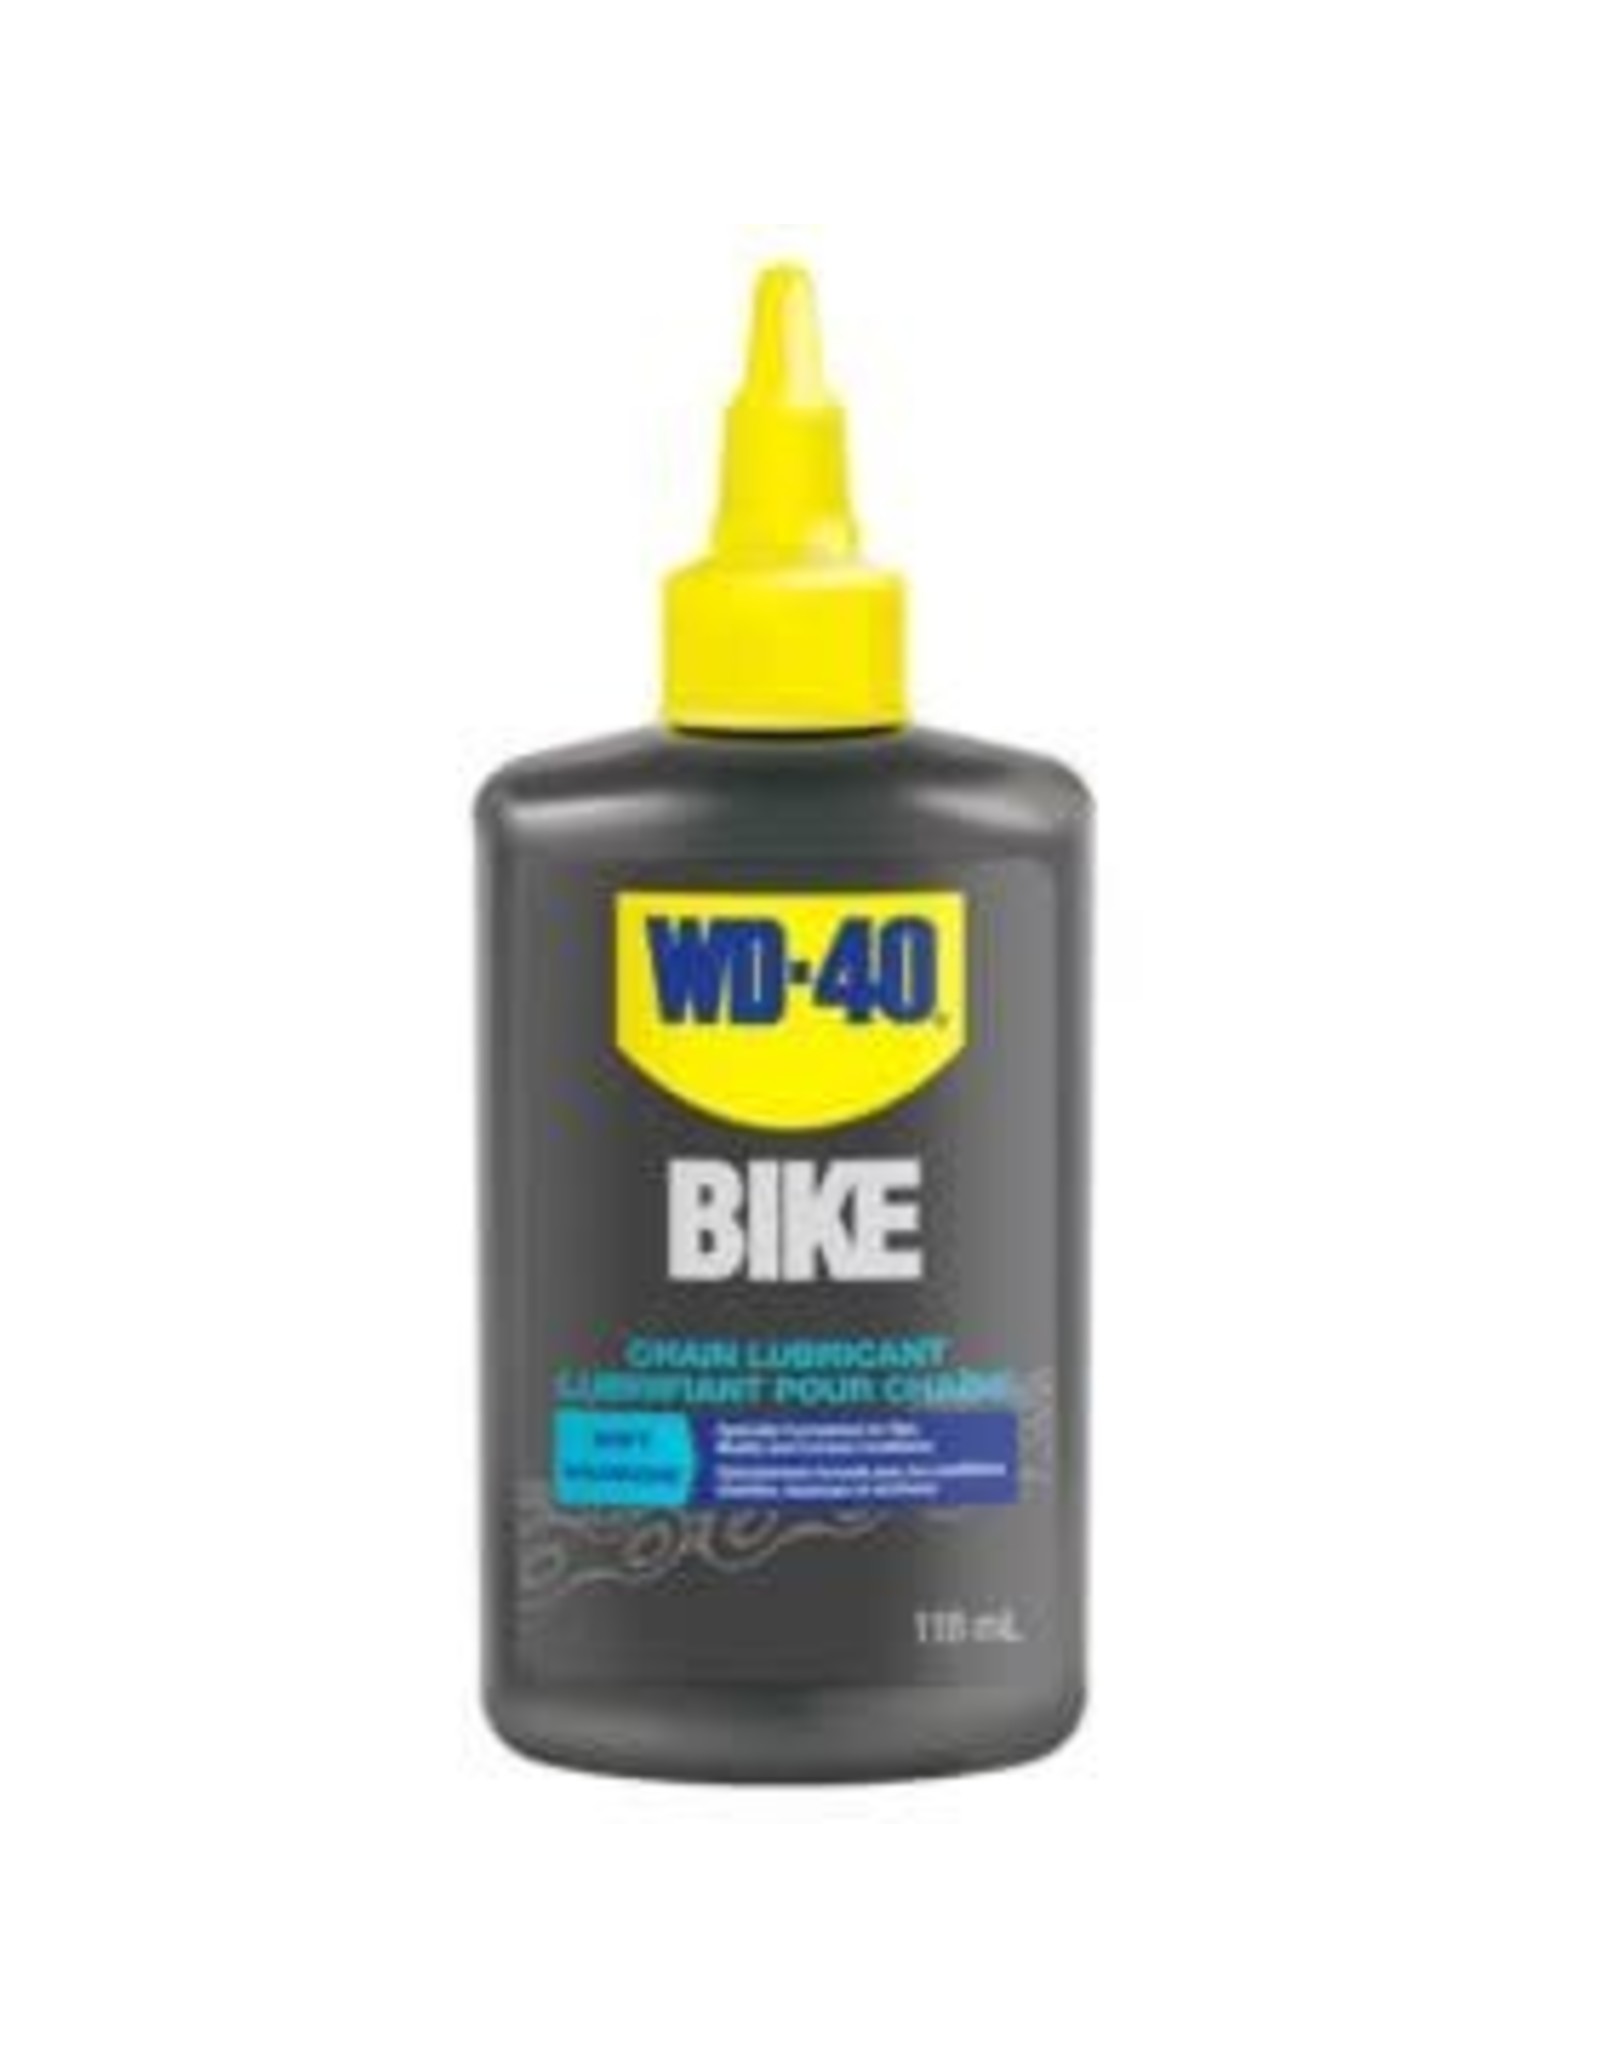 WD-40 Bike Chain Lubricant - Wet